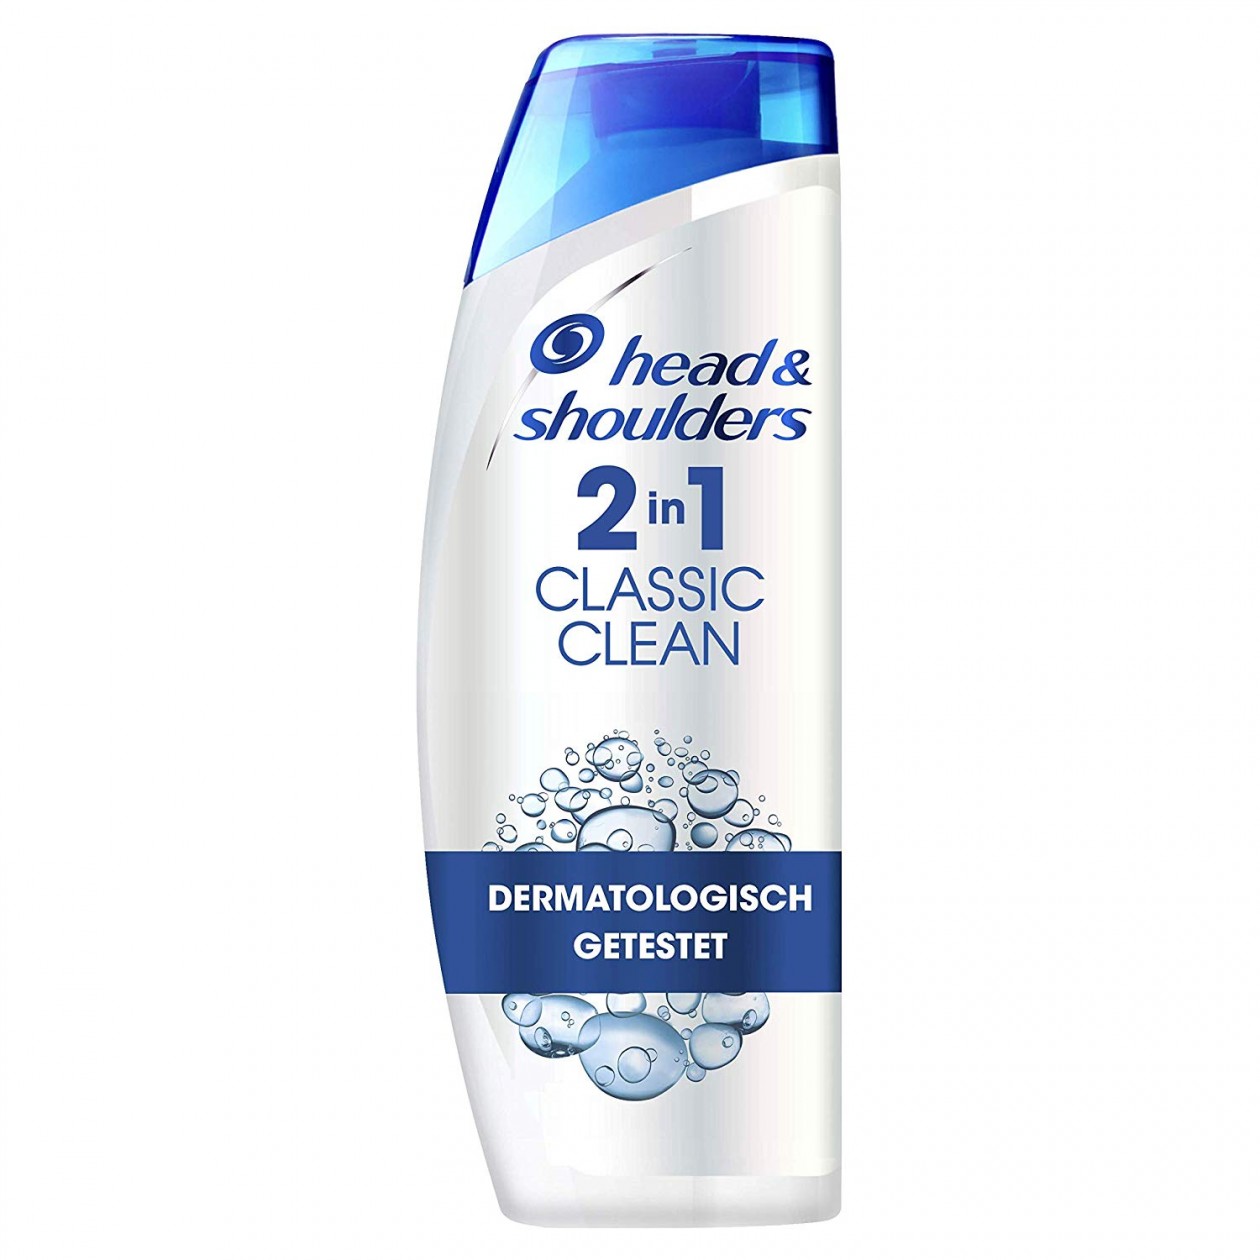 Head & Shoulders Shampoo Classic Clean 2in1 250mL